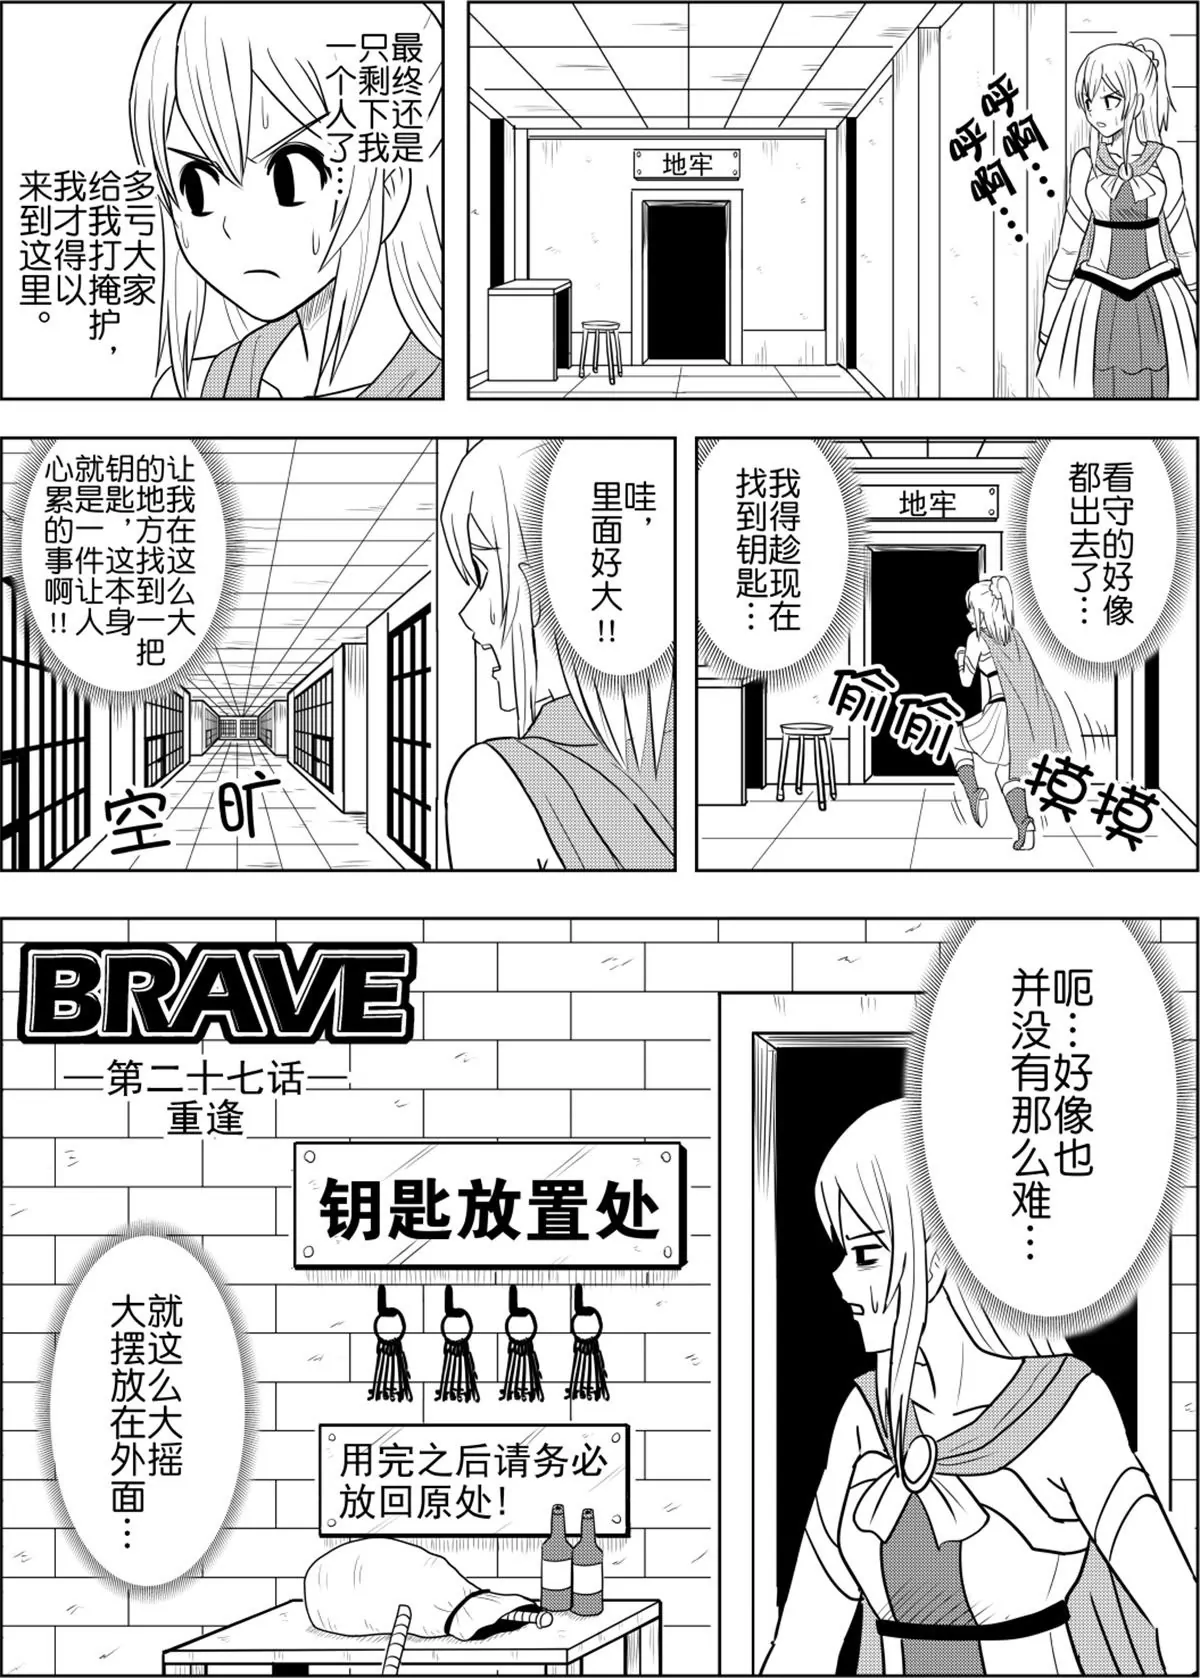 Brave - 第27话上 - 1